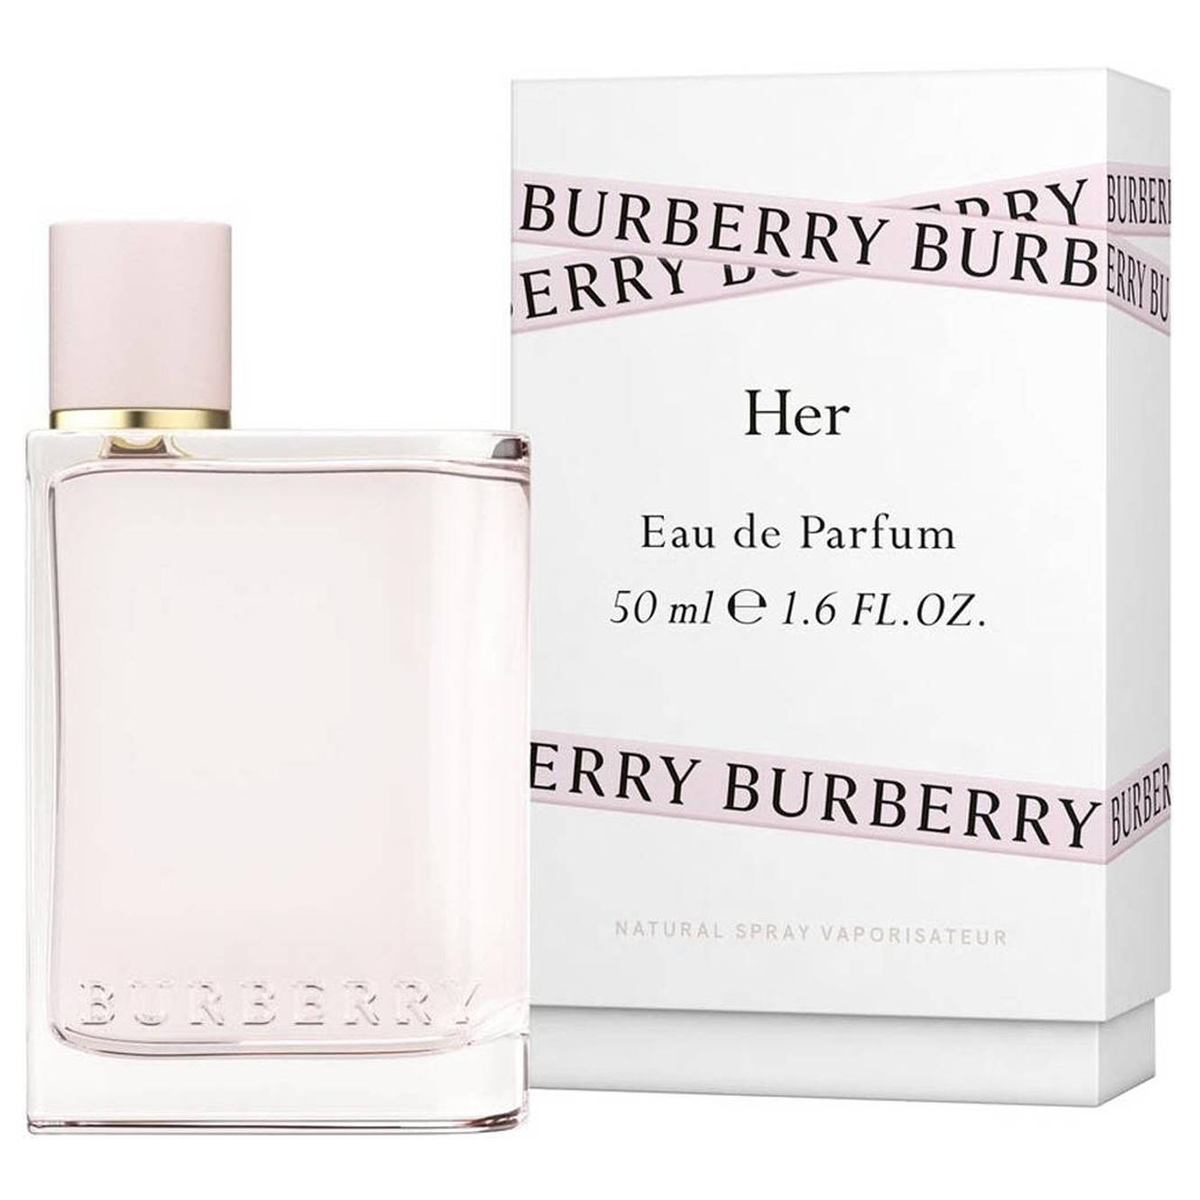 Total 39+ imagen burberry perfume her - Abzlocal.mx